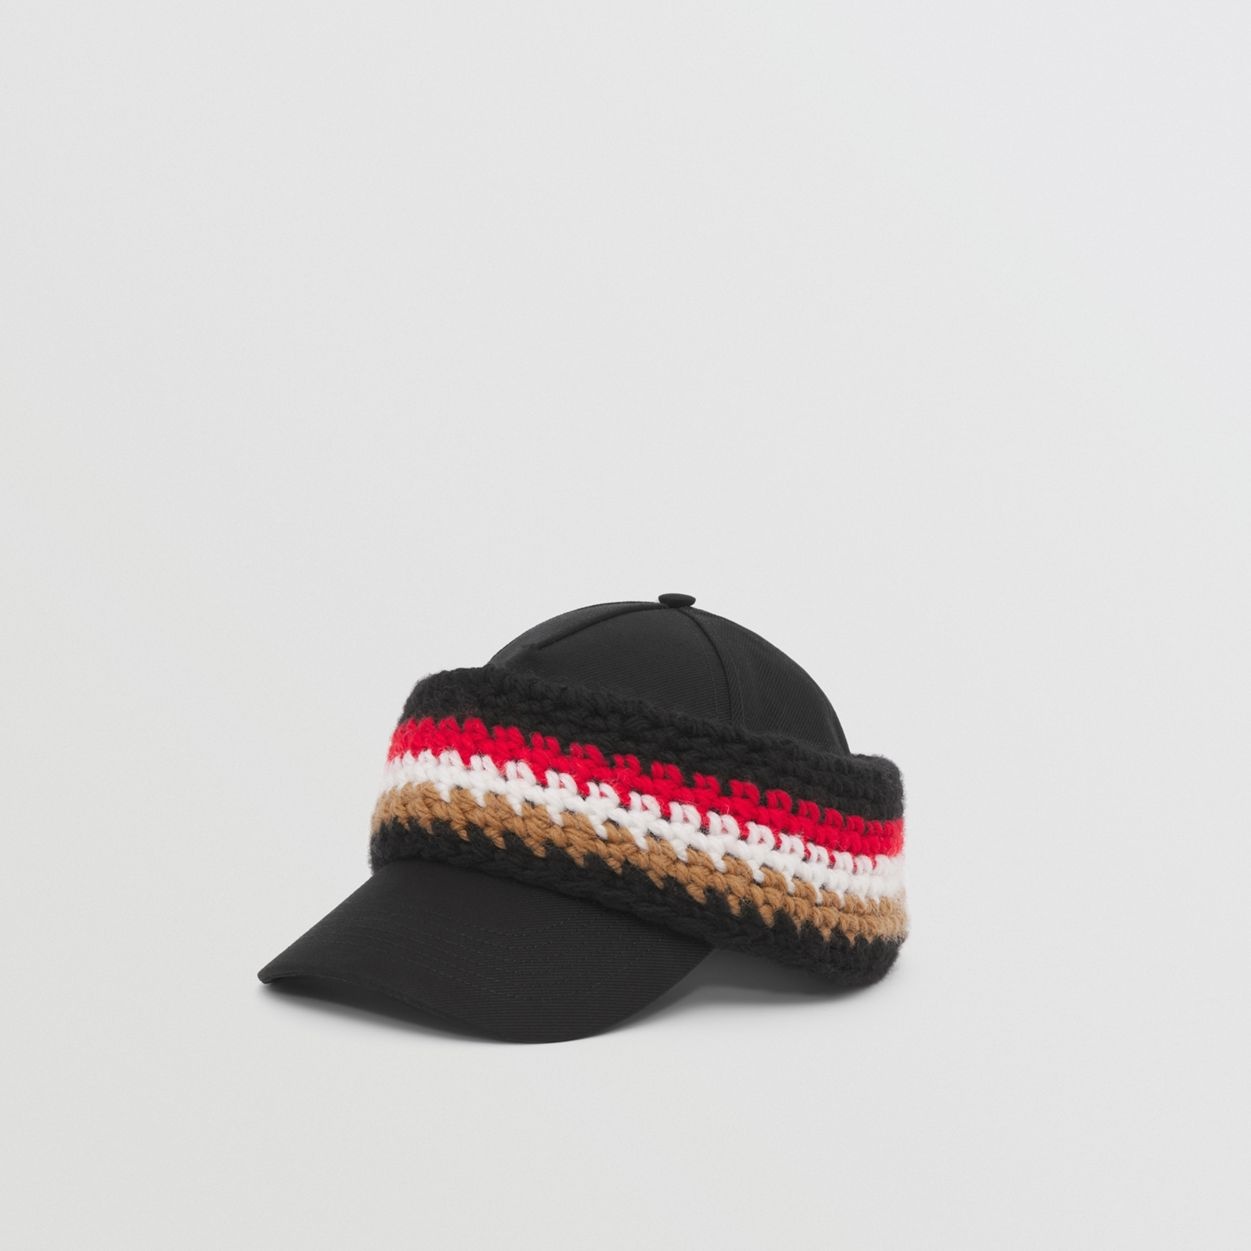 Cotton Baseball Cap with Crochet Knit Headband - 5